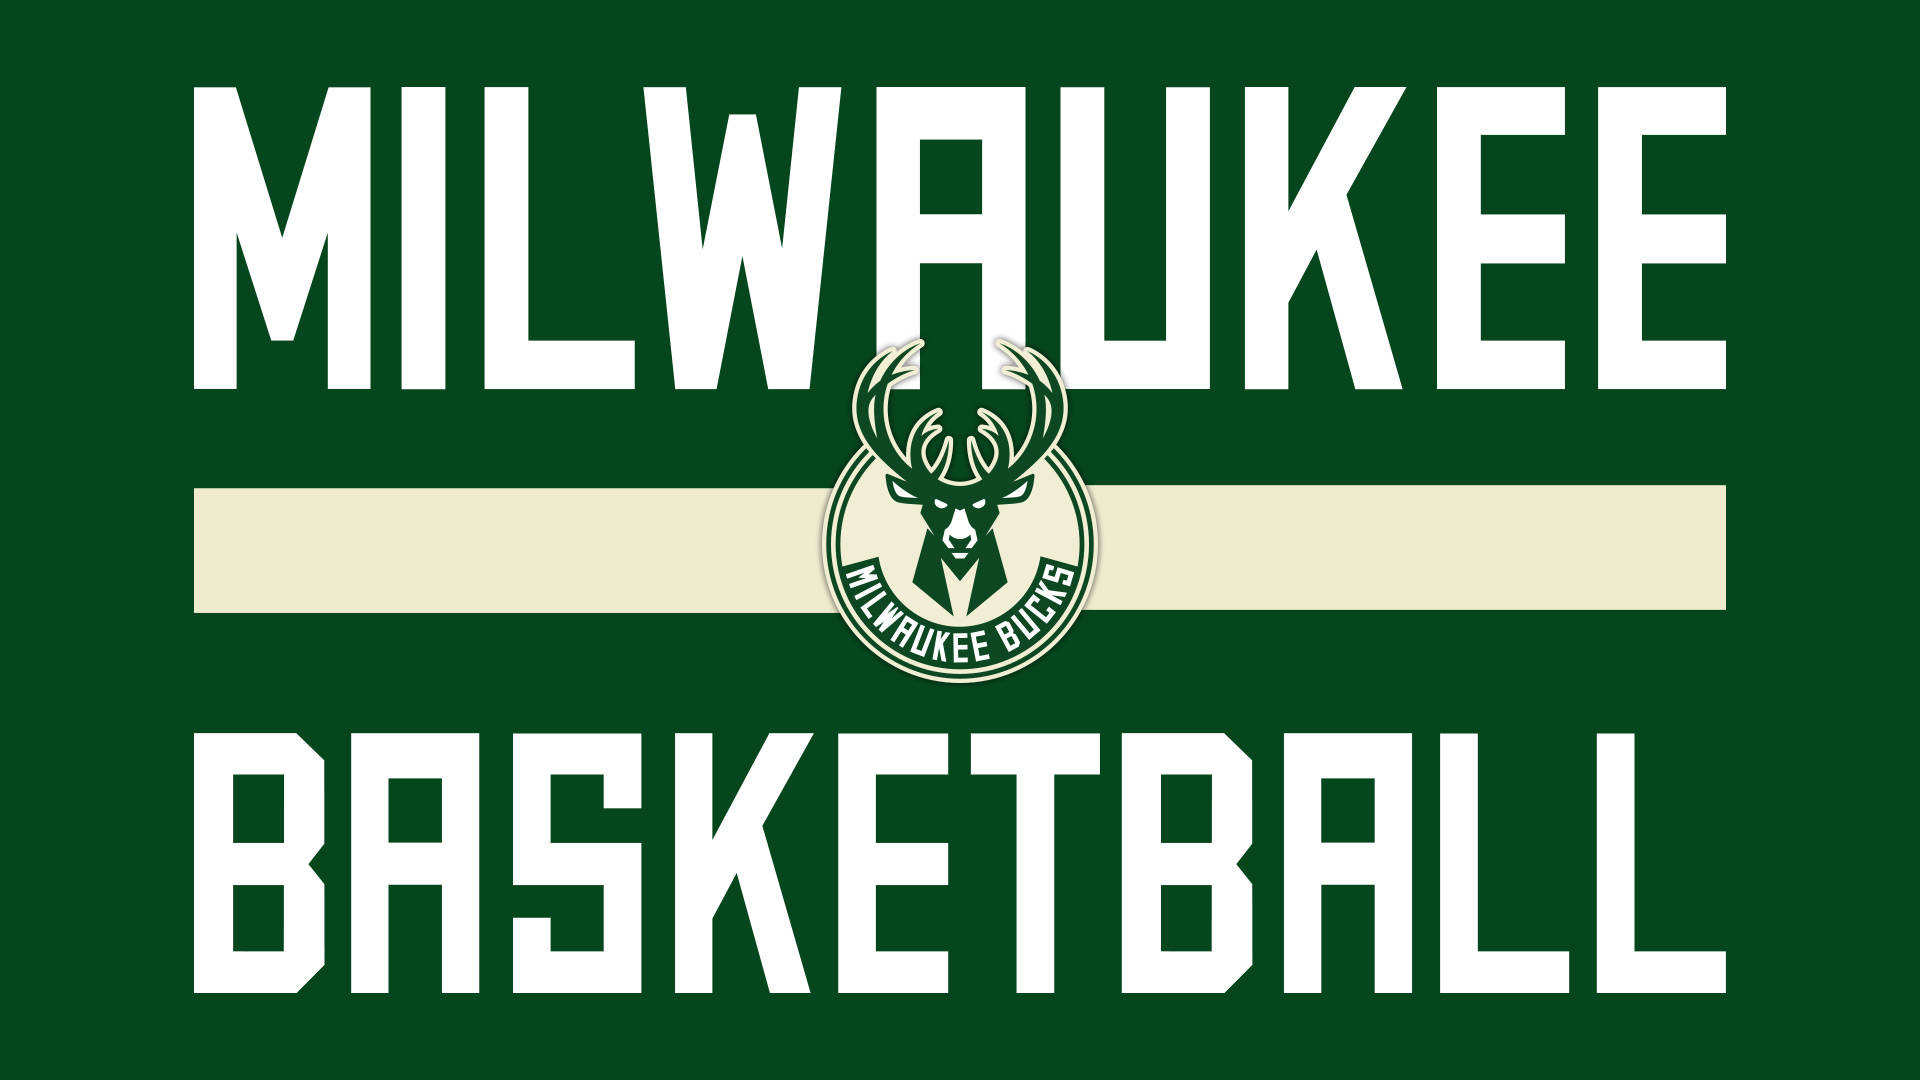 Milwaukeebucks Basketball-team Wallpaper